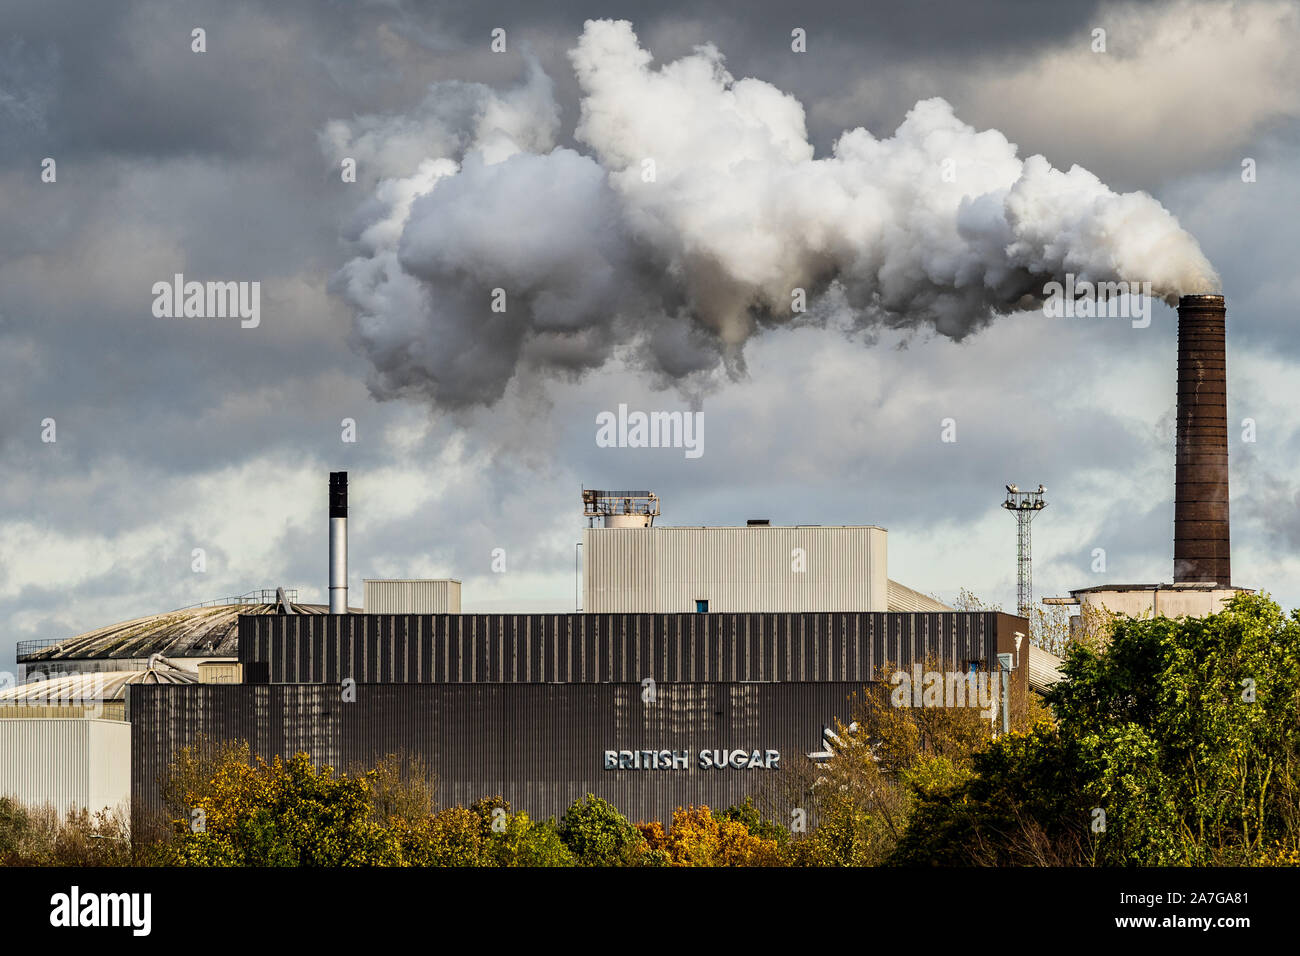 UK Factory Emissions - Sugar Beet Factory Chimneys - il vapore sale dalla British Sugar Factory a Bury St Edmunds Suffolk UK Foto Stock